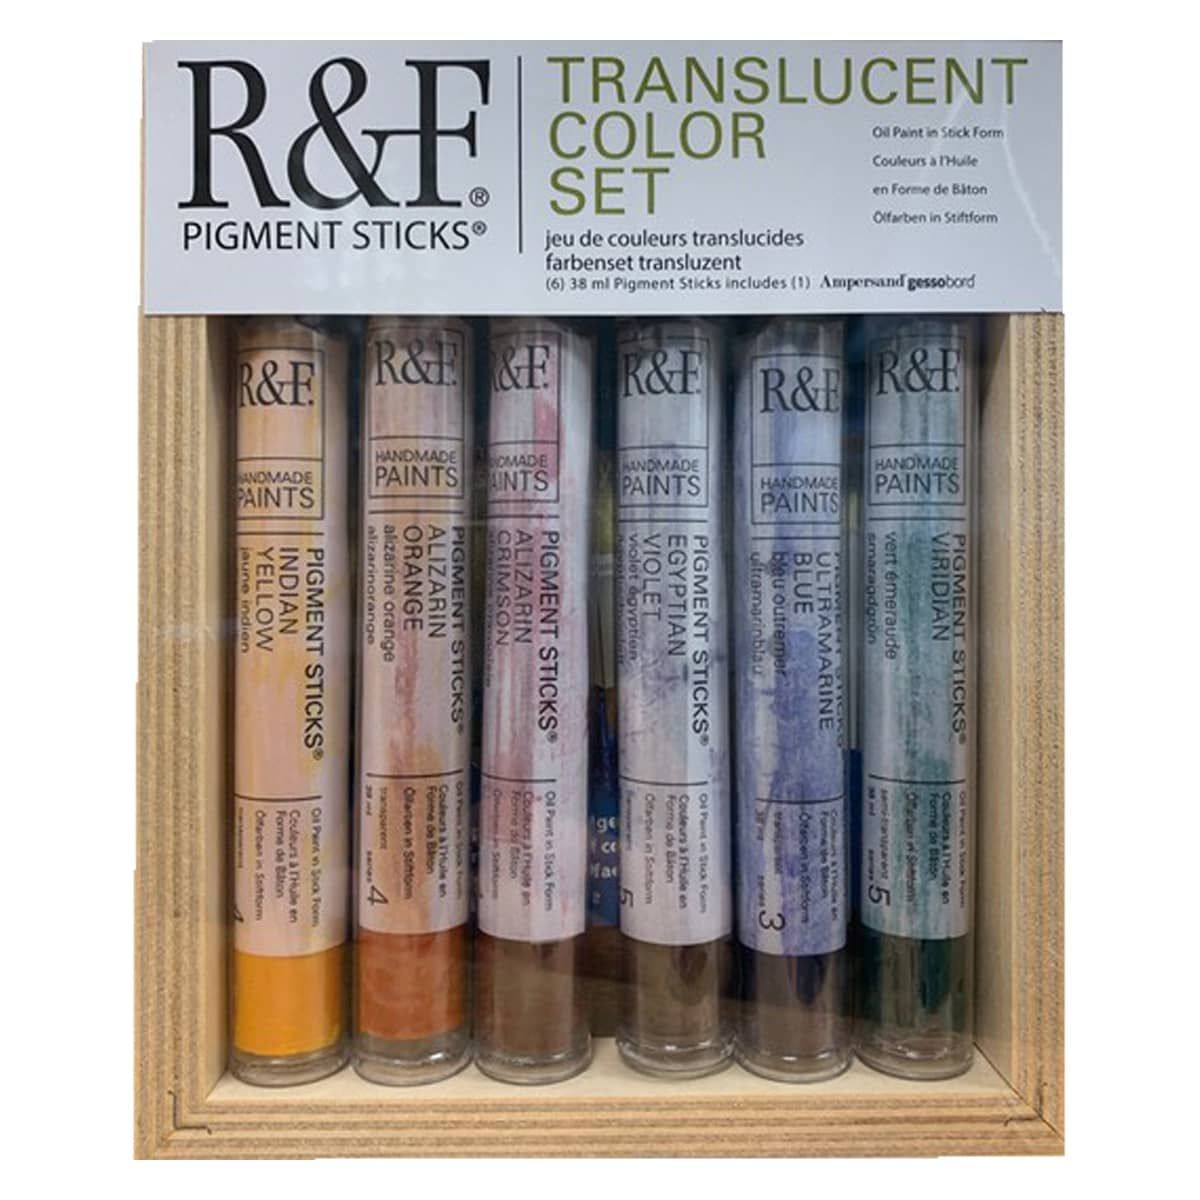 R&F Pigment Sticks Set of 6 - Translucent Colors